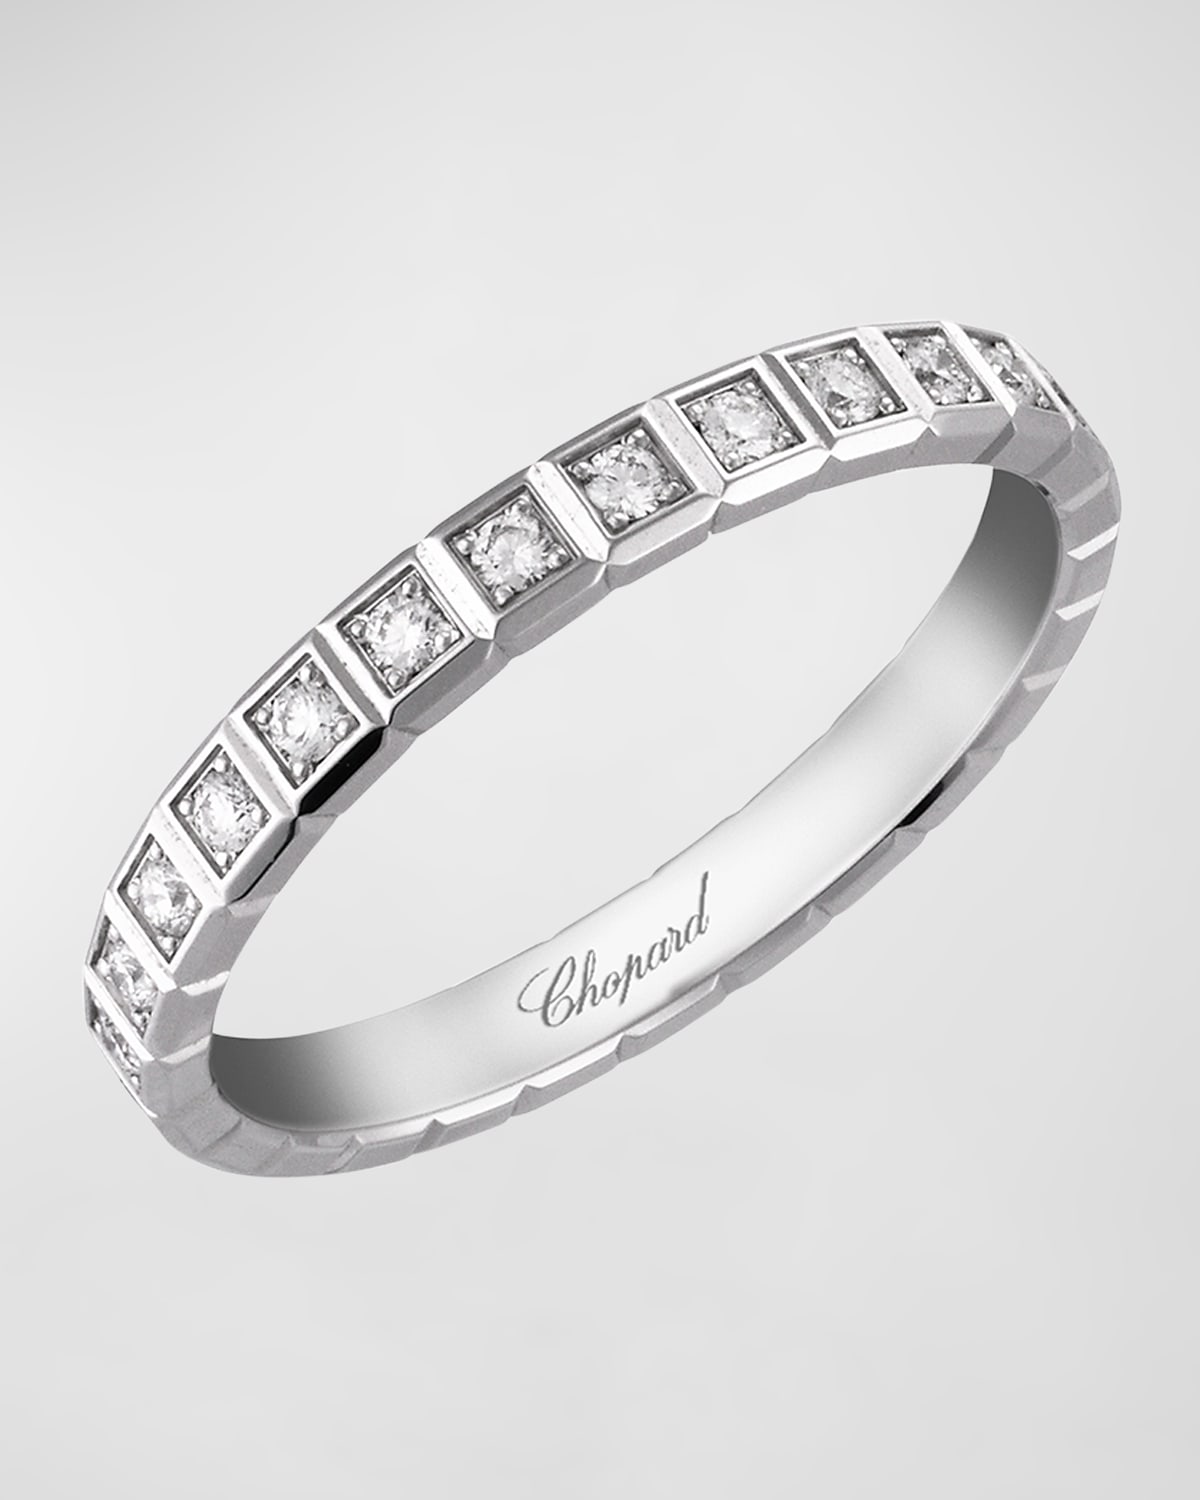 Chopard 18k White Gold Ice Cube Diamond Ring, Size 53